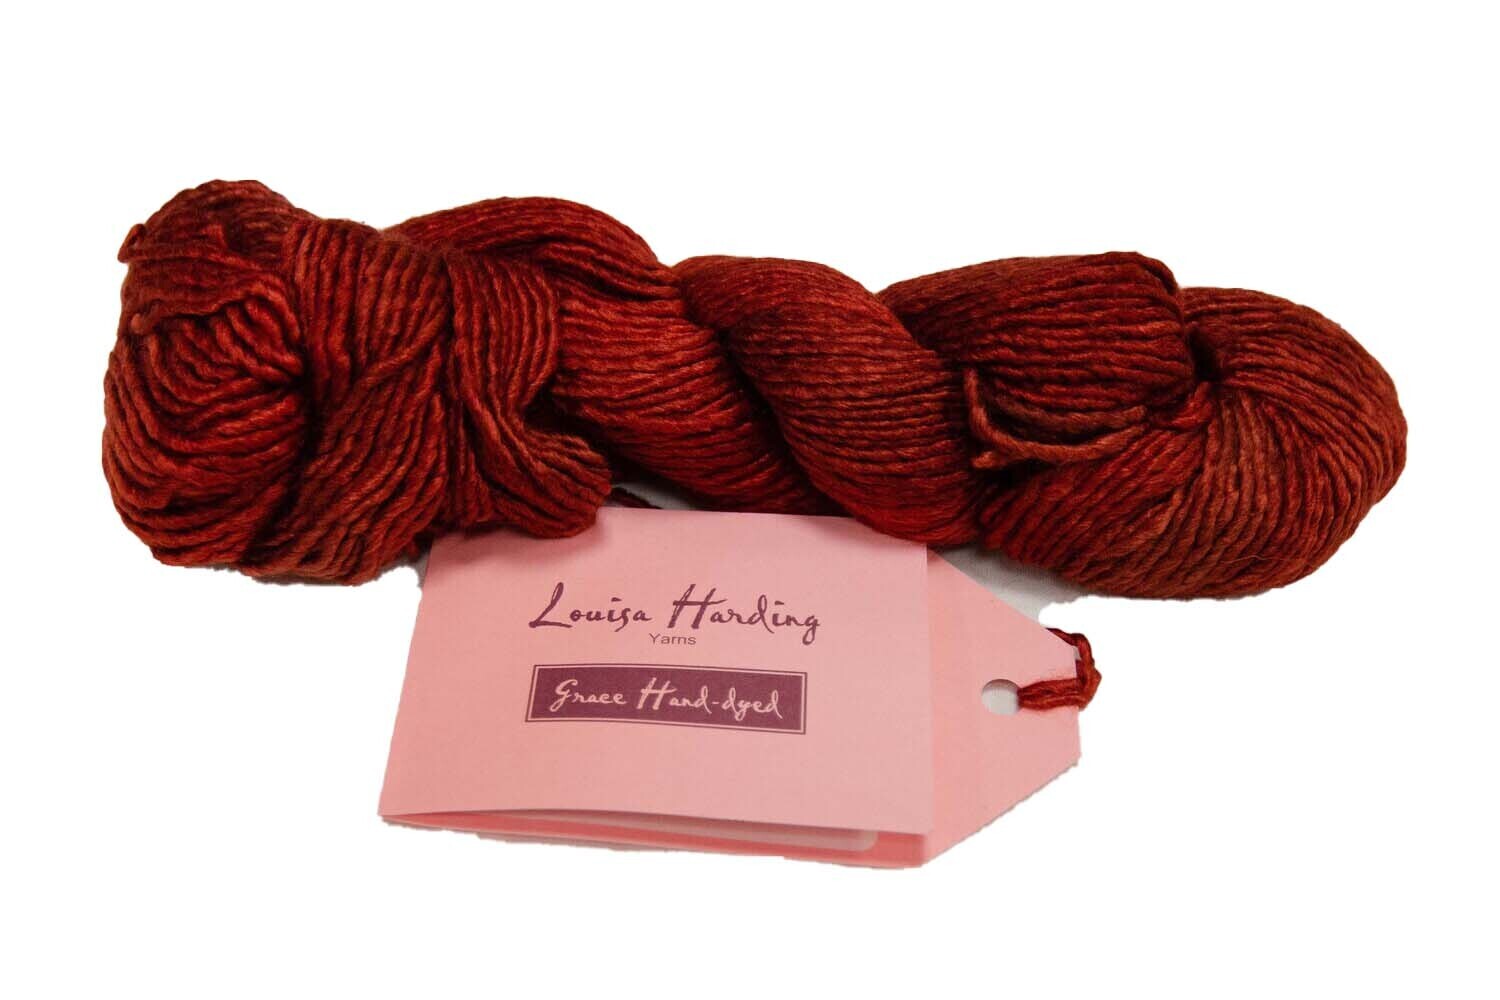 Louisa Harding - Grace handdyed garn - nr 9 - rostbrun